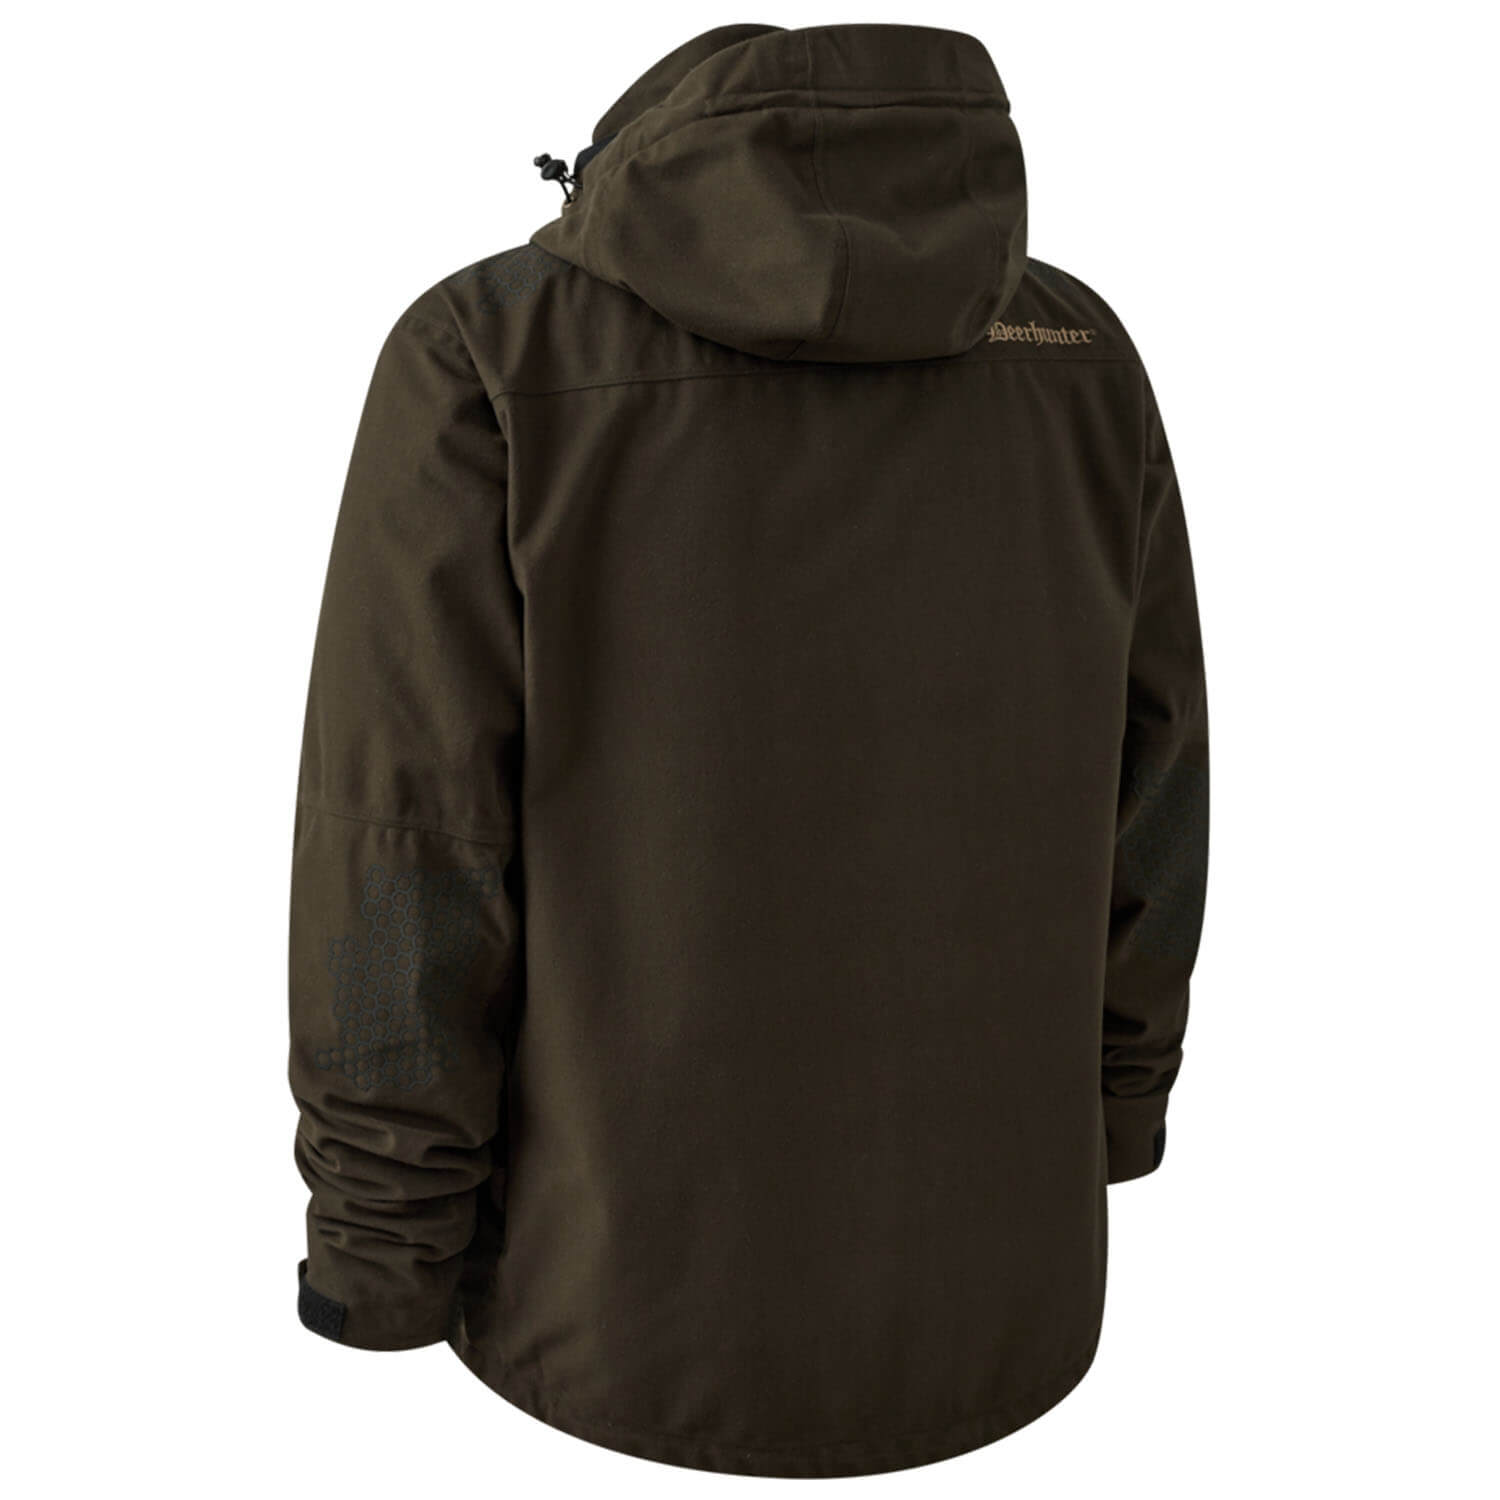  Deerhunter Game Pro Light hunting jacket (Wood)